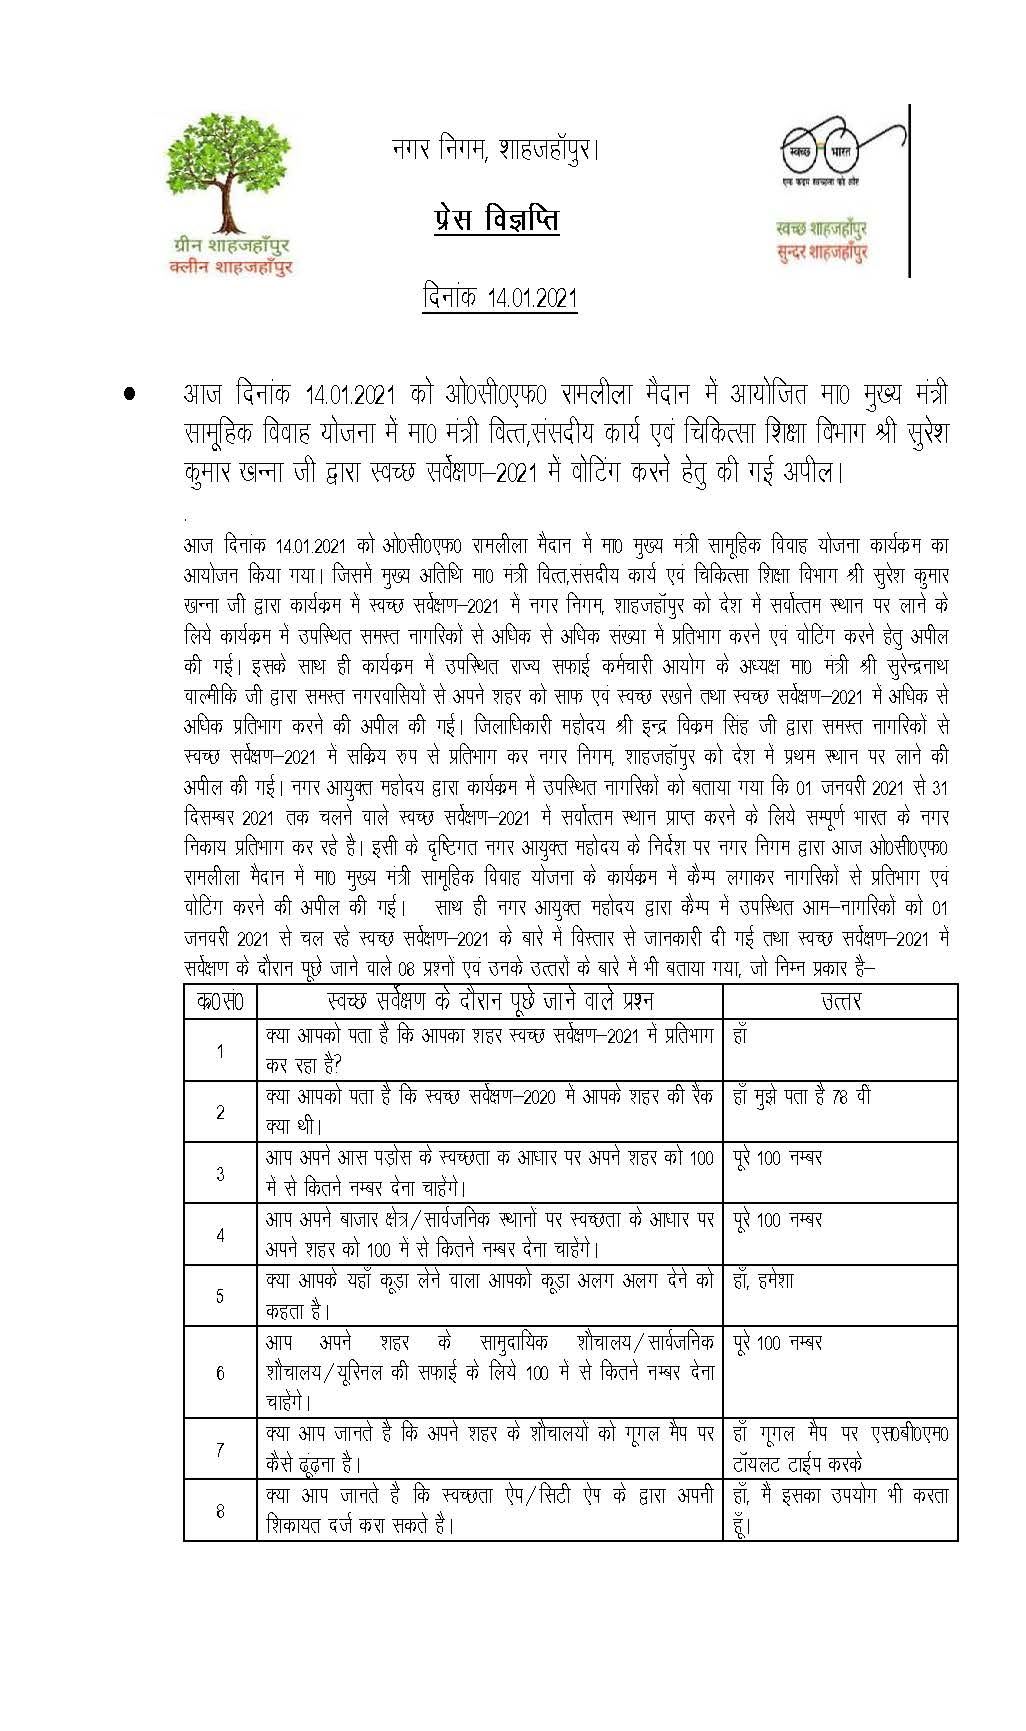 Regarding appeal made by Hon’ble Minister Shri Suresh Kumar Khanna for voting in Swachch Survey-2021 from the venue of Hon;ble Mukhya Mantri Samuhik Vivah Yojna program organised at O.C.F. Ram Lila ground on 14.01.2021